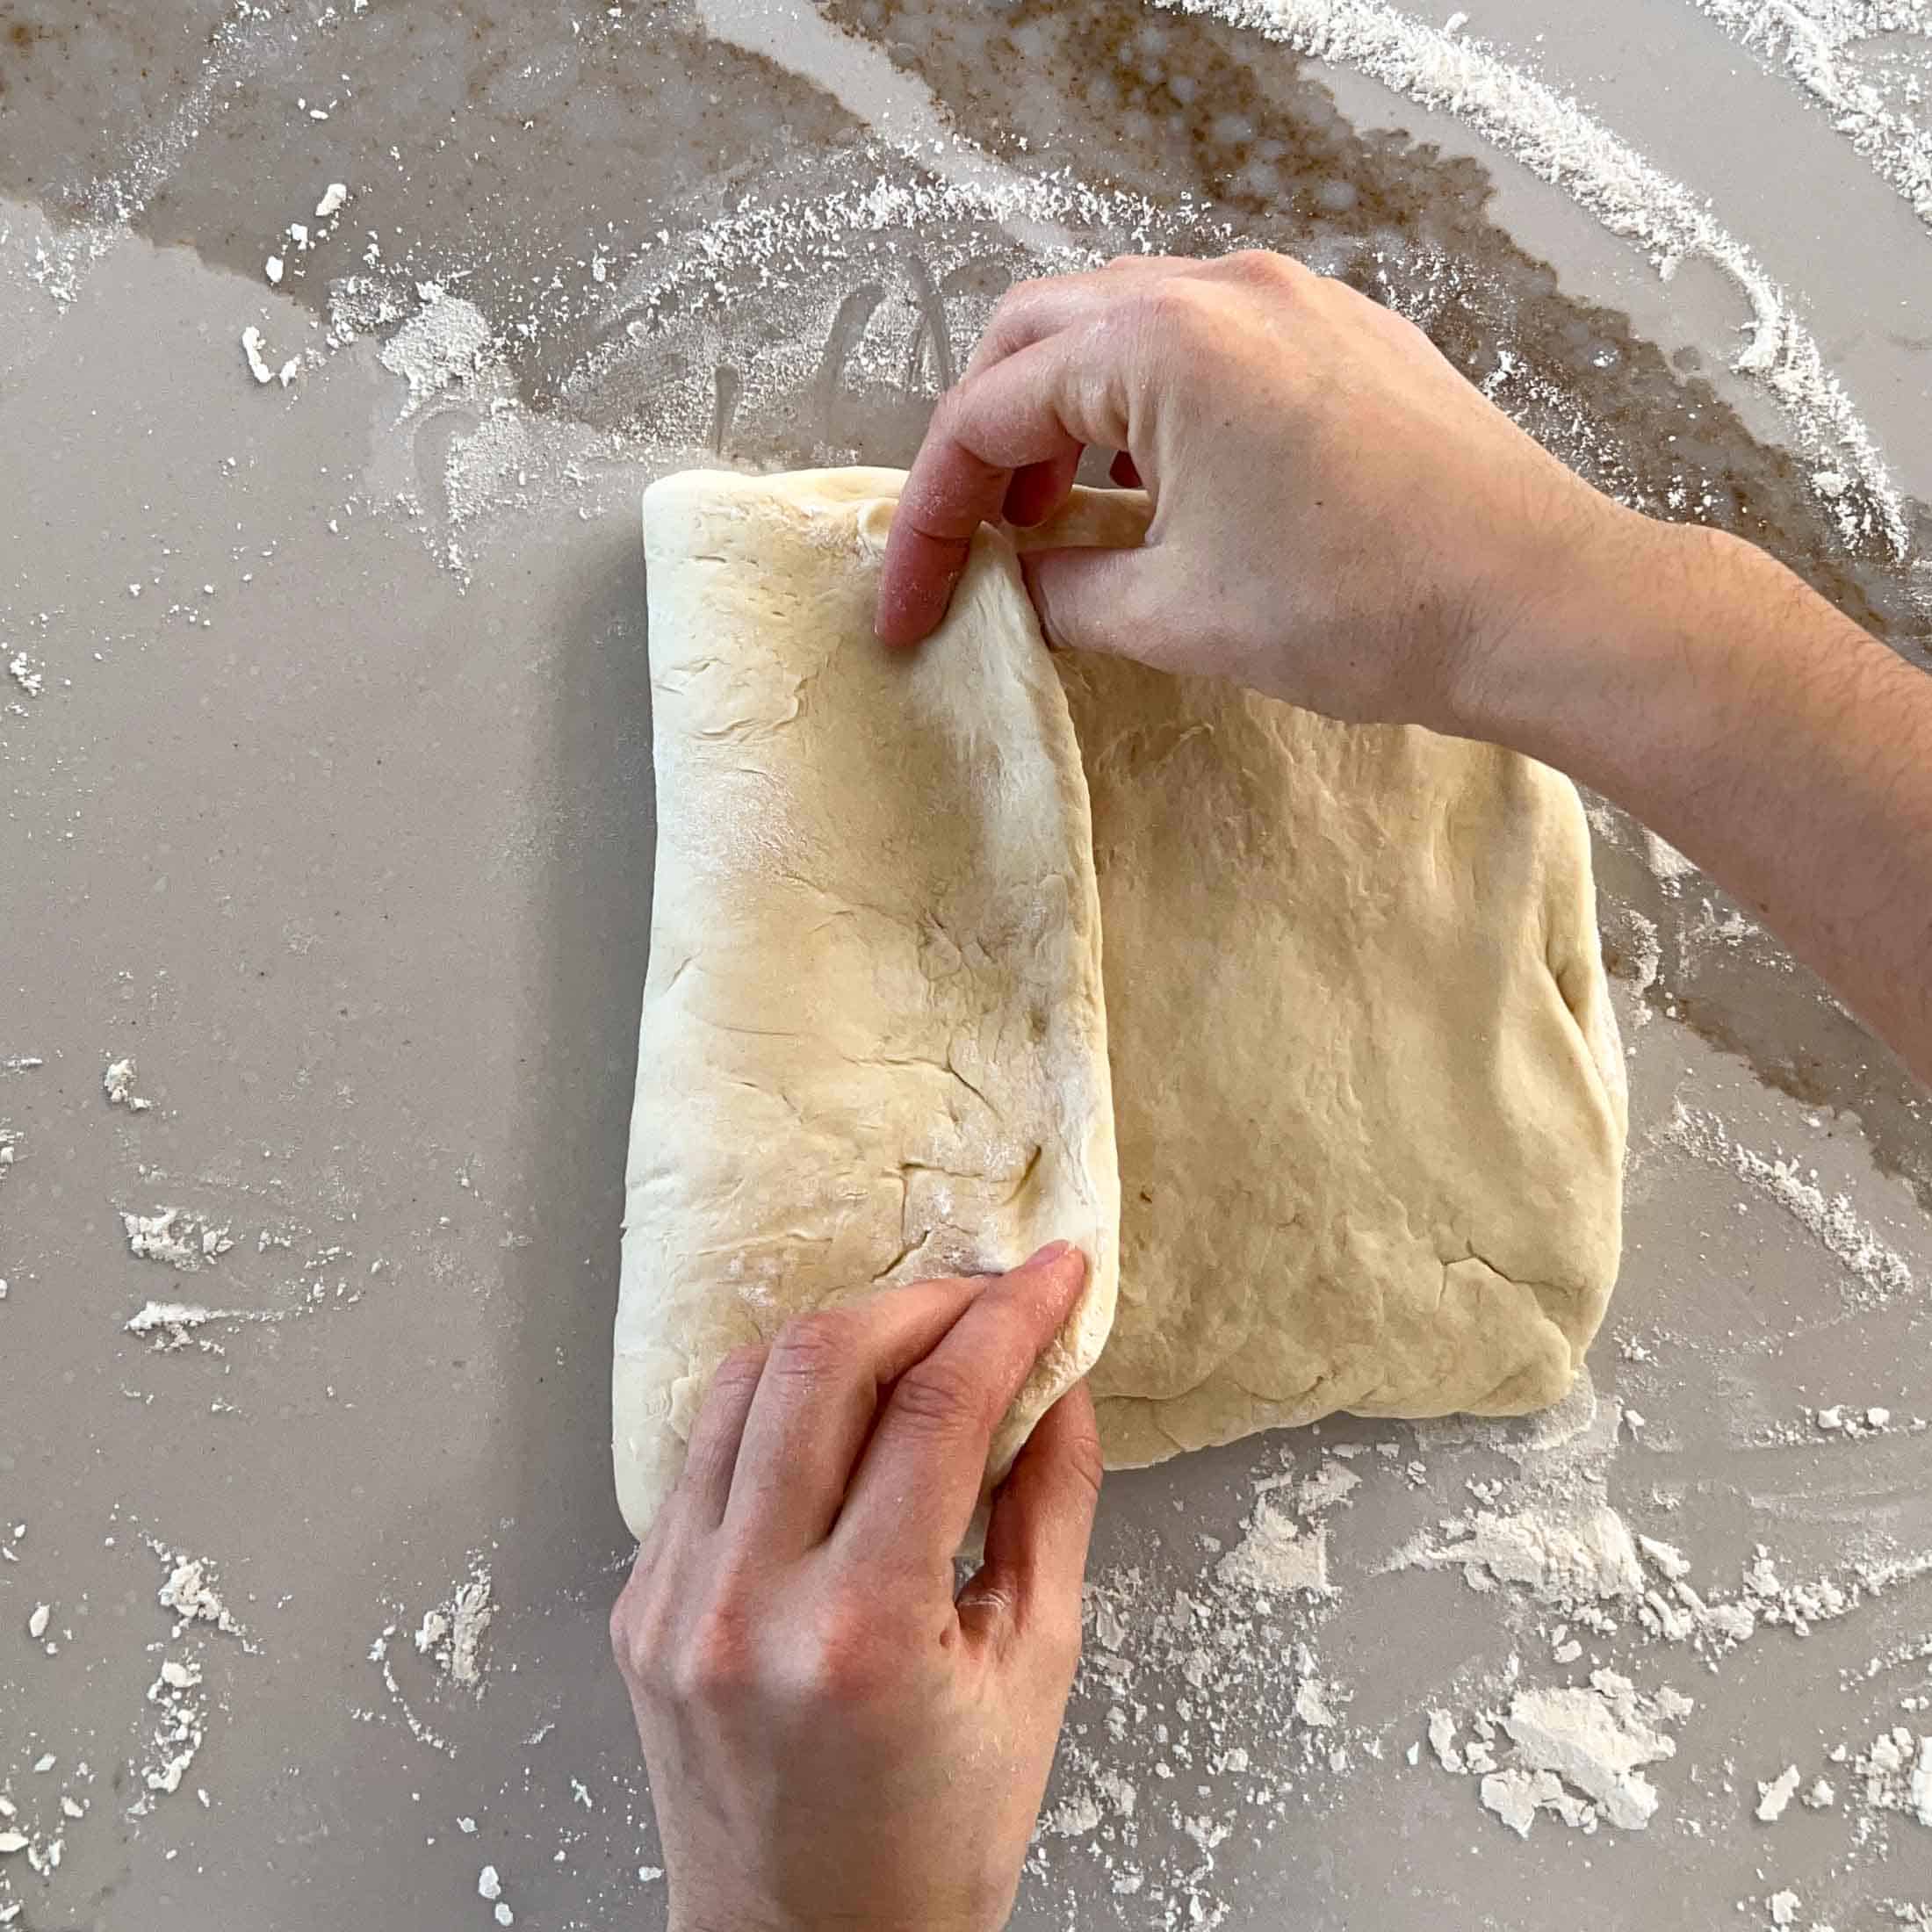 Folding sourdough into thirds to shape the dough into a sandwich loaf.